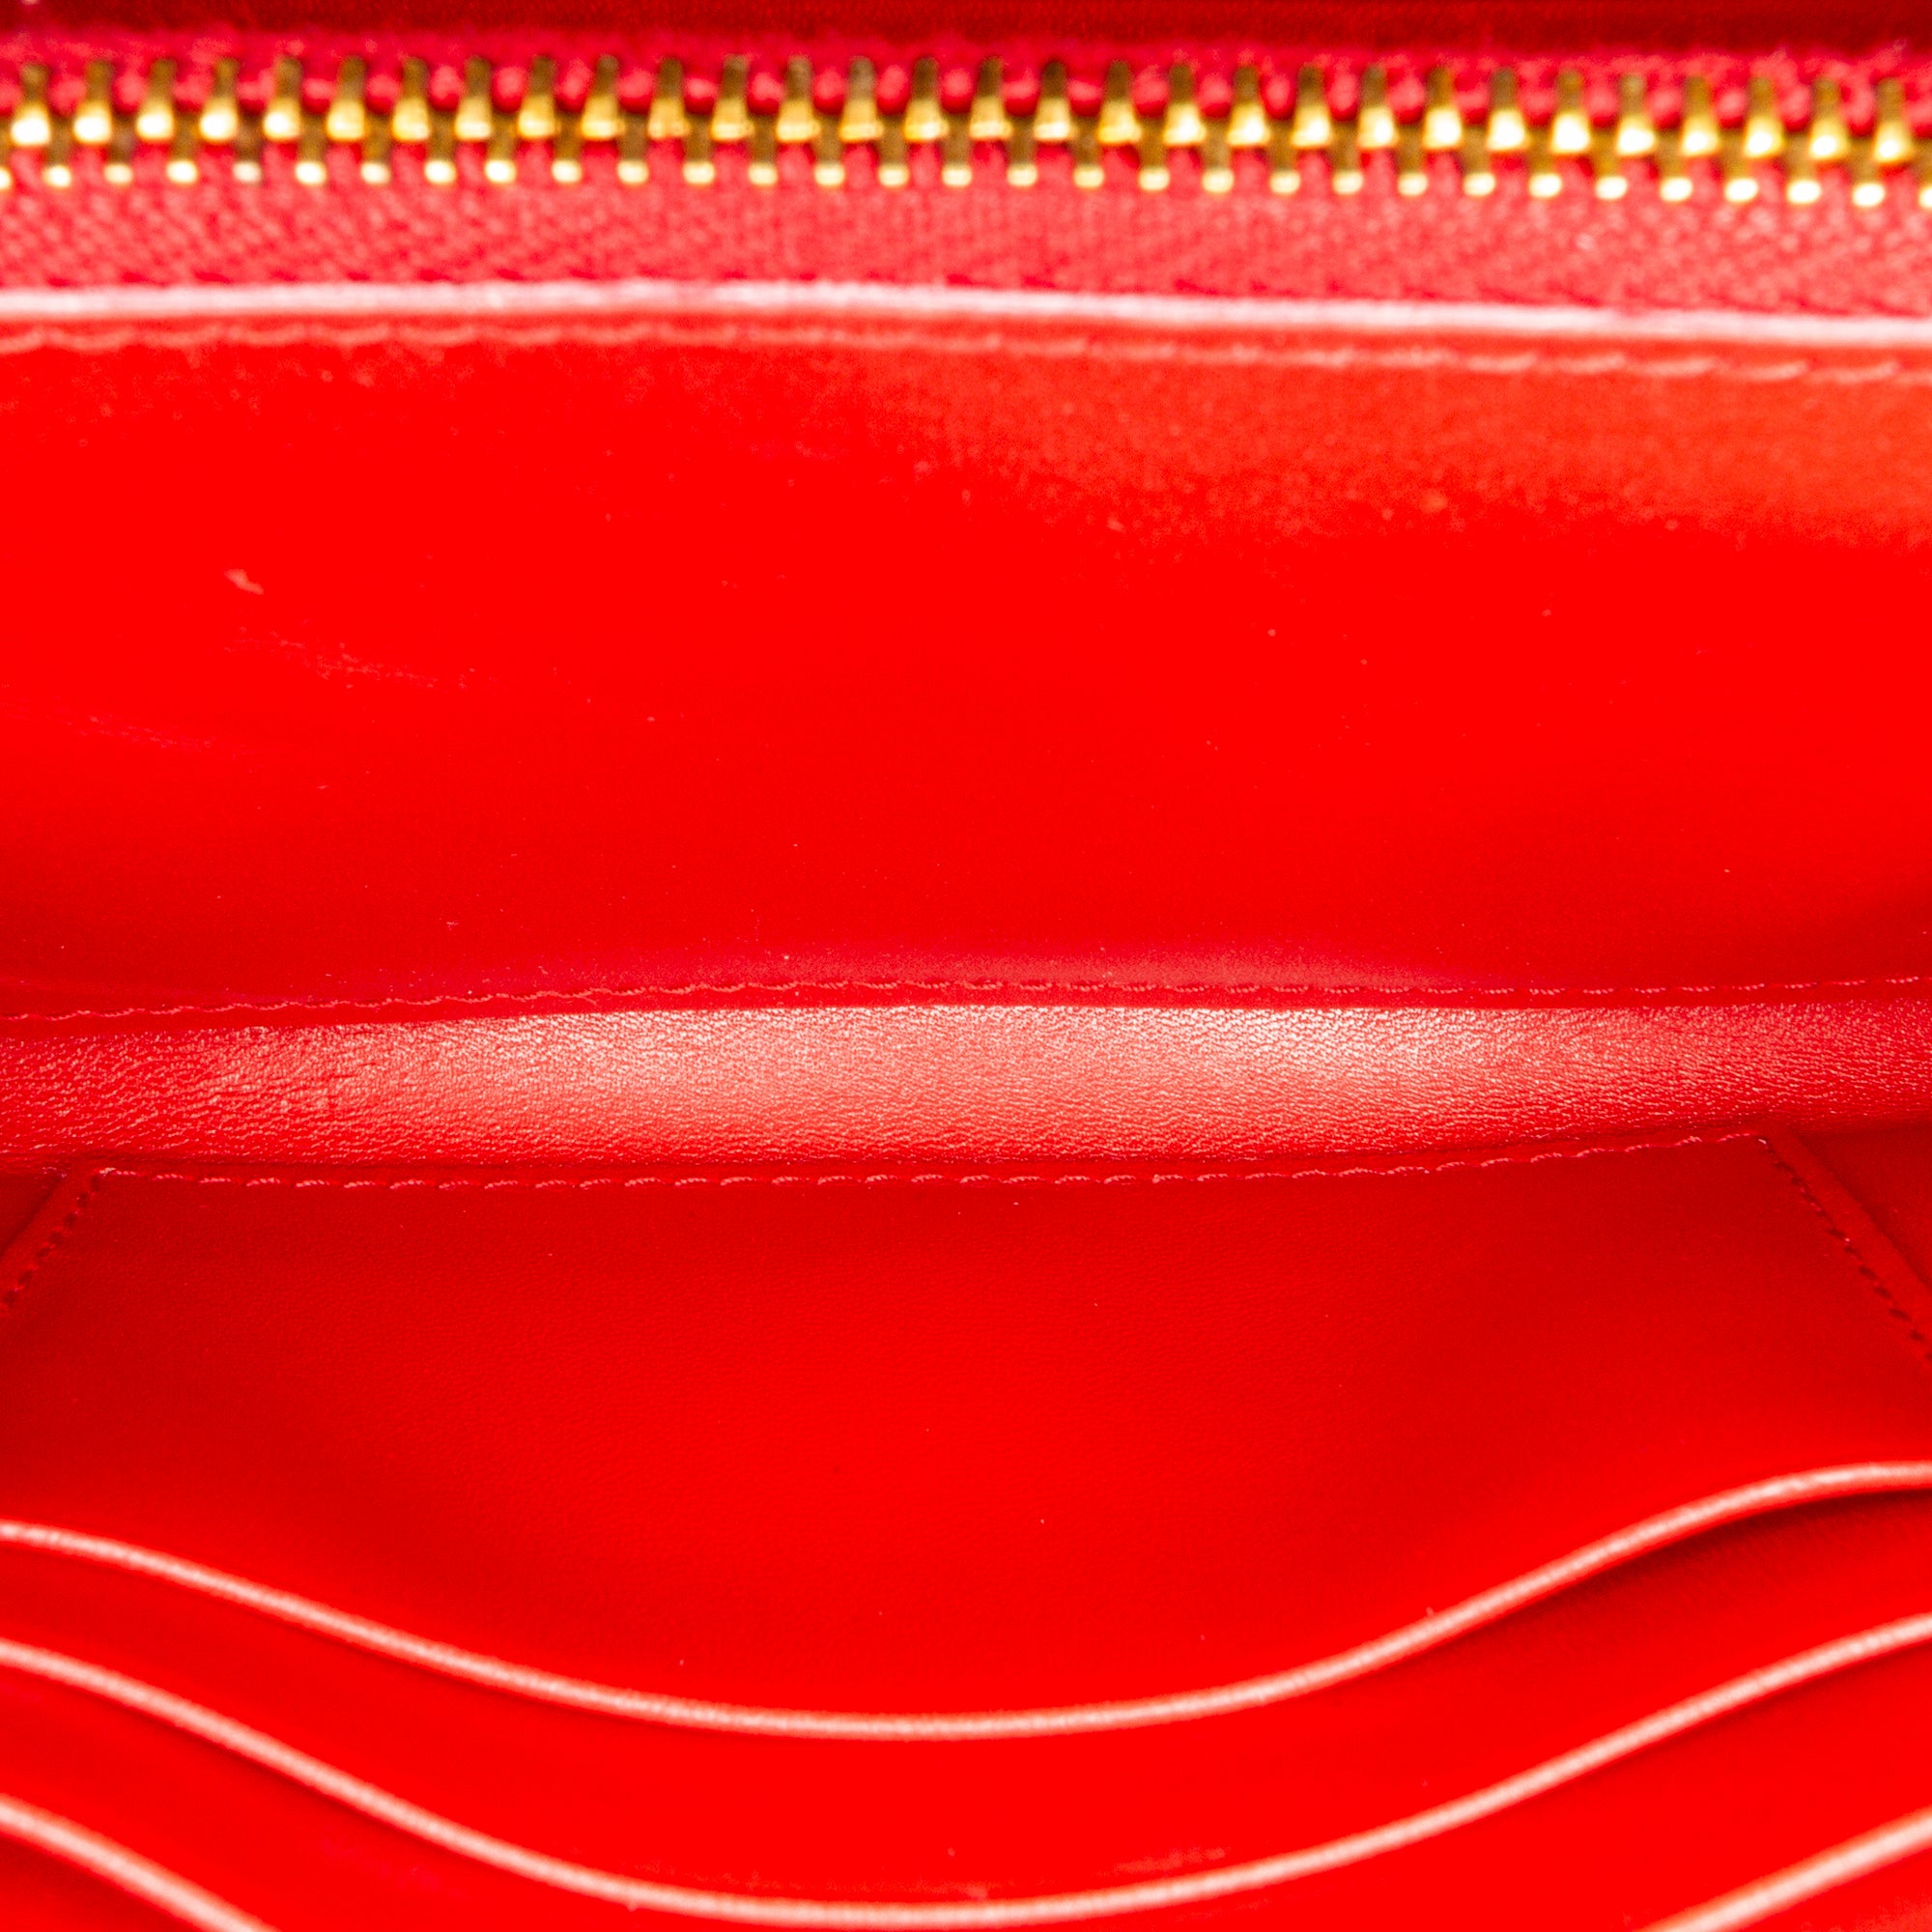 Black Prada Leather Wallet on Strap Crossbody Bag – Designer Revival